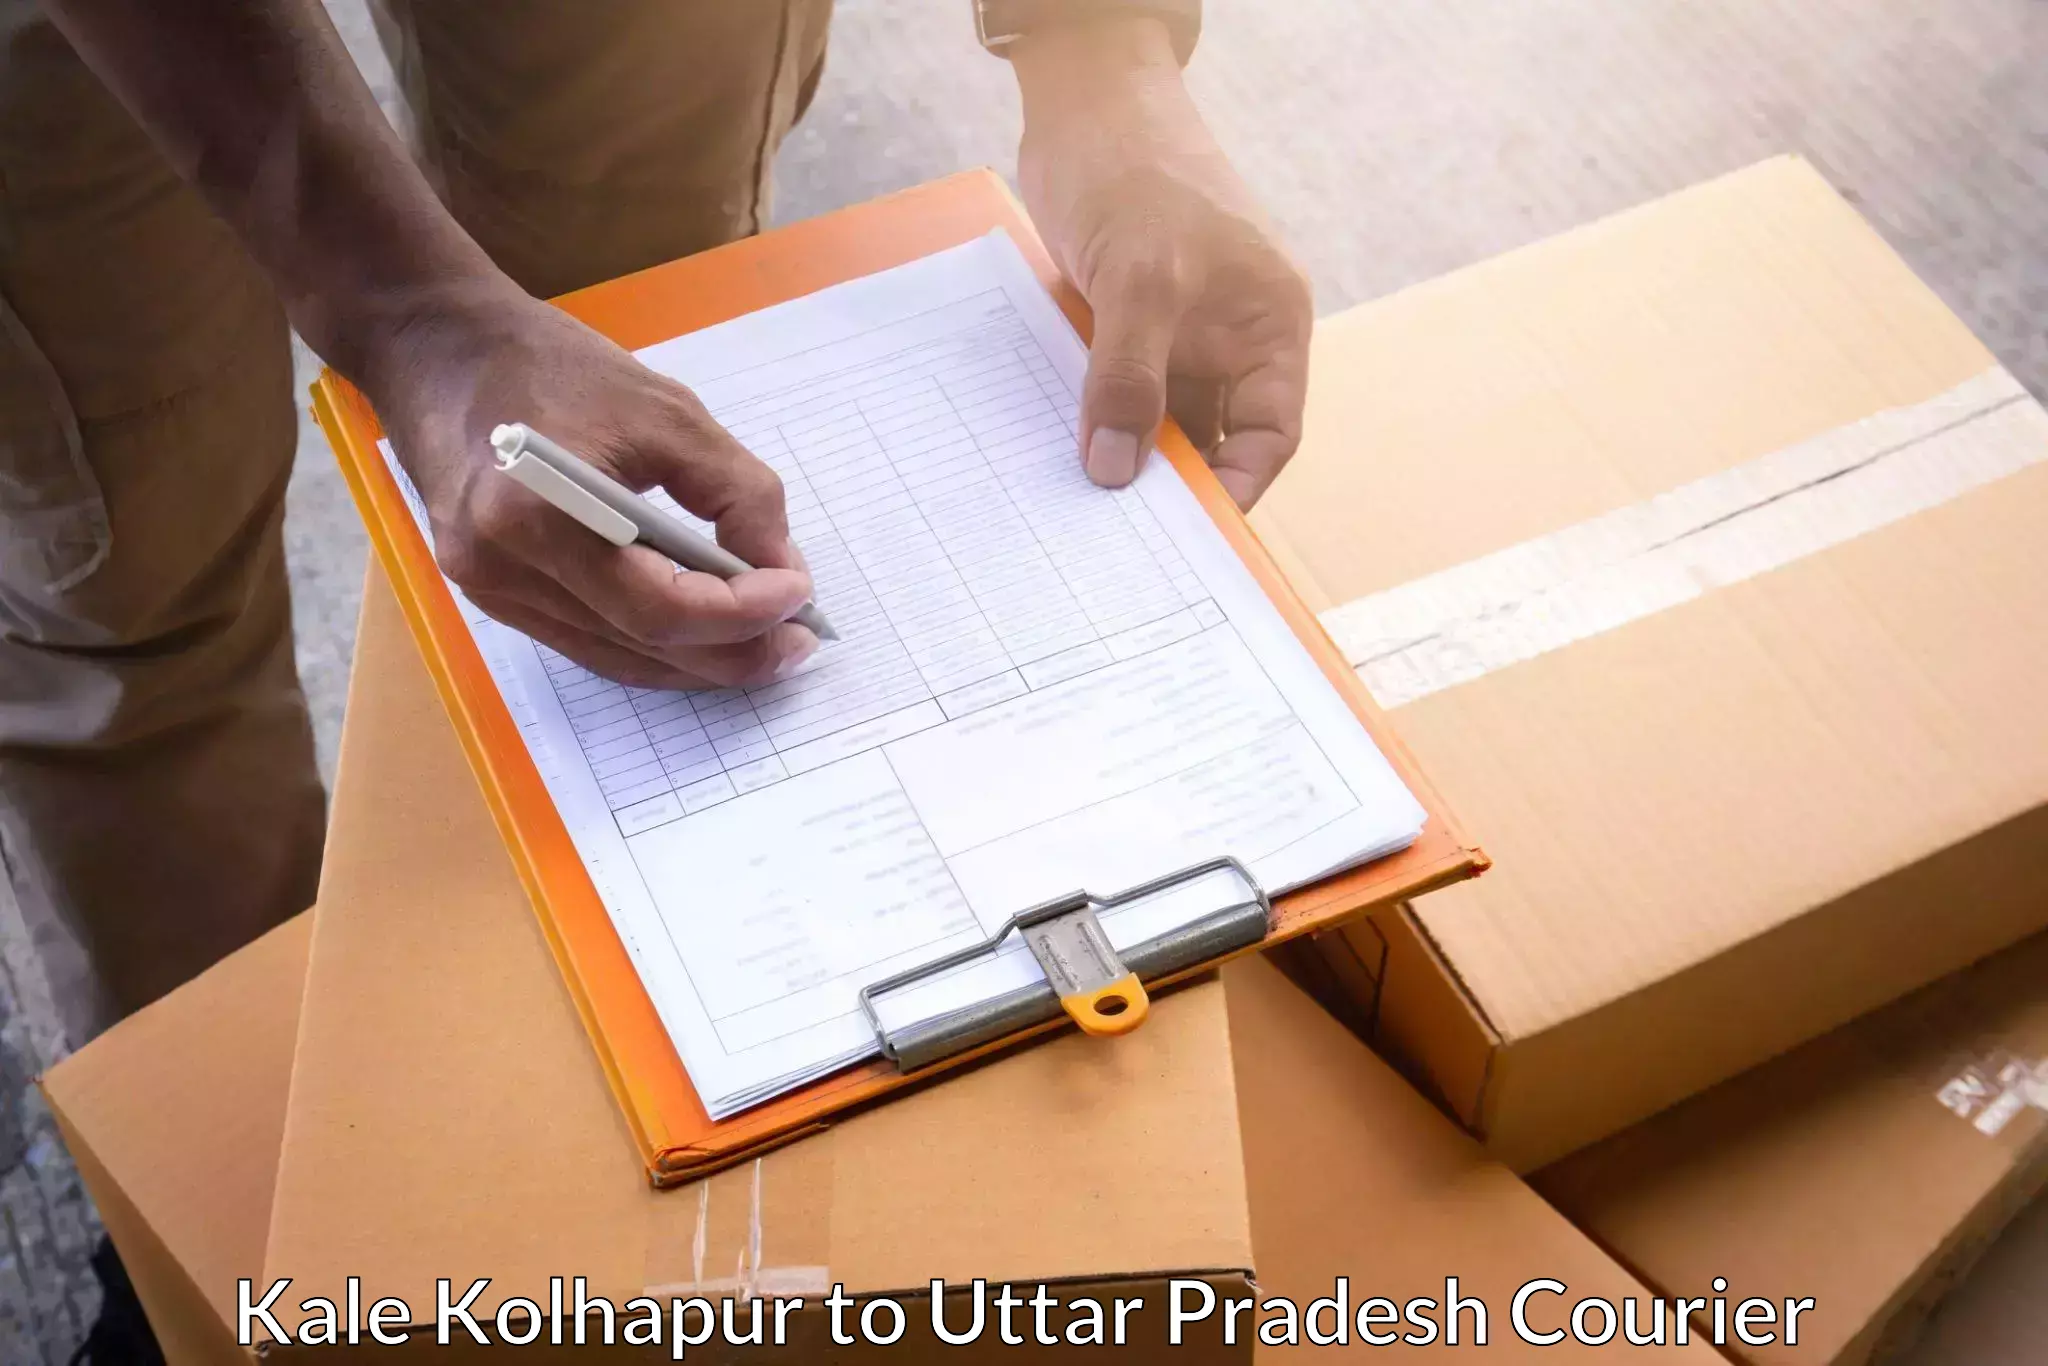 Courier app Kale Kolhapur to Sahaswan